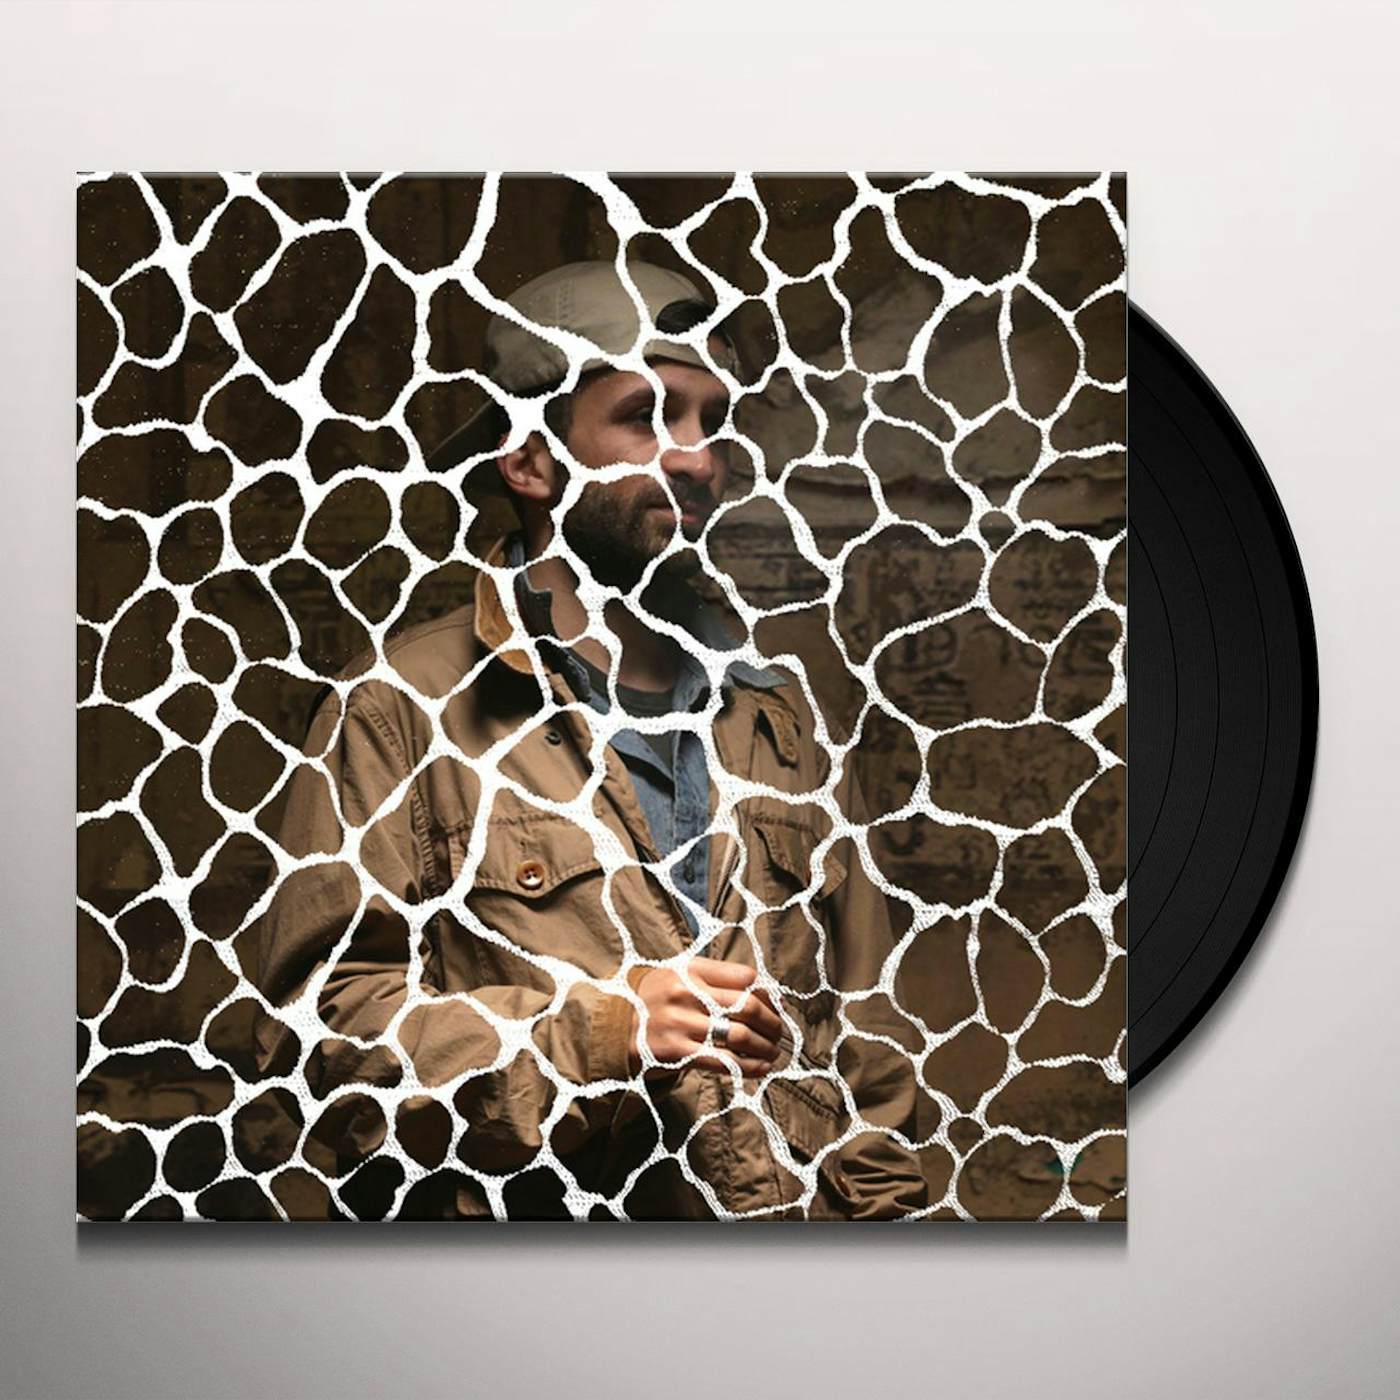 Samiyam Animals Have Feelings Vinyl Record